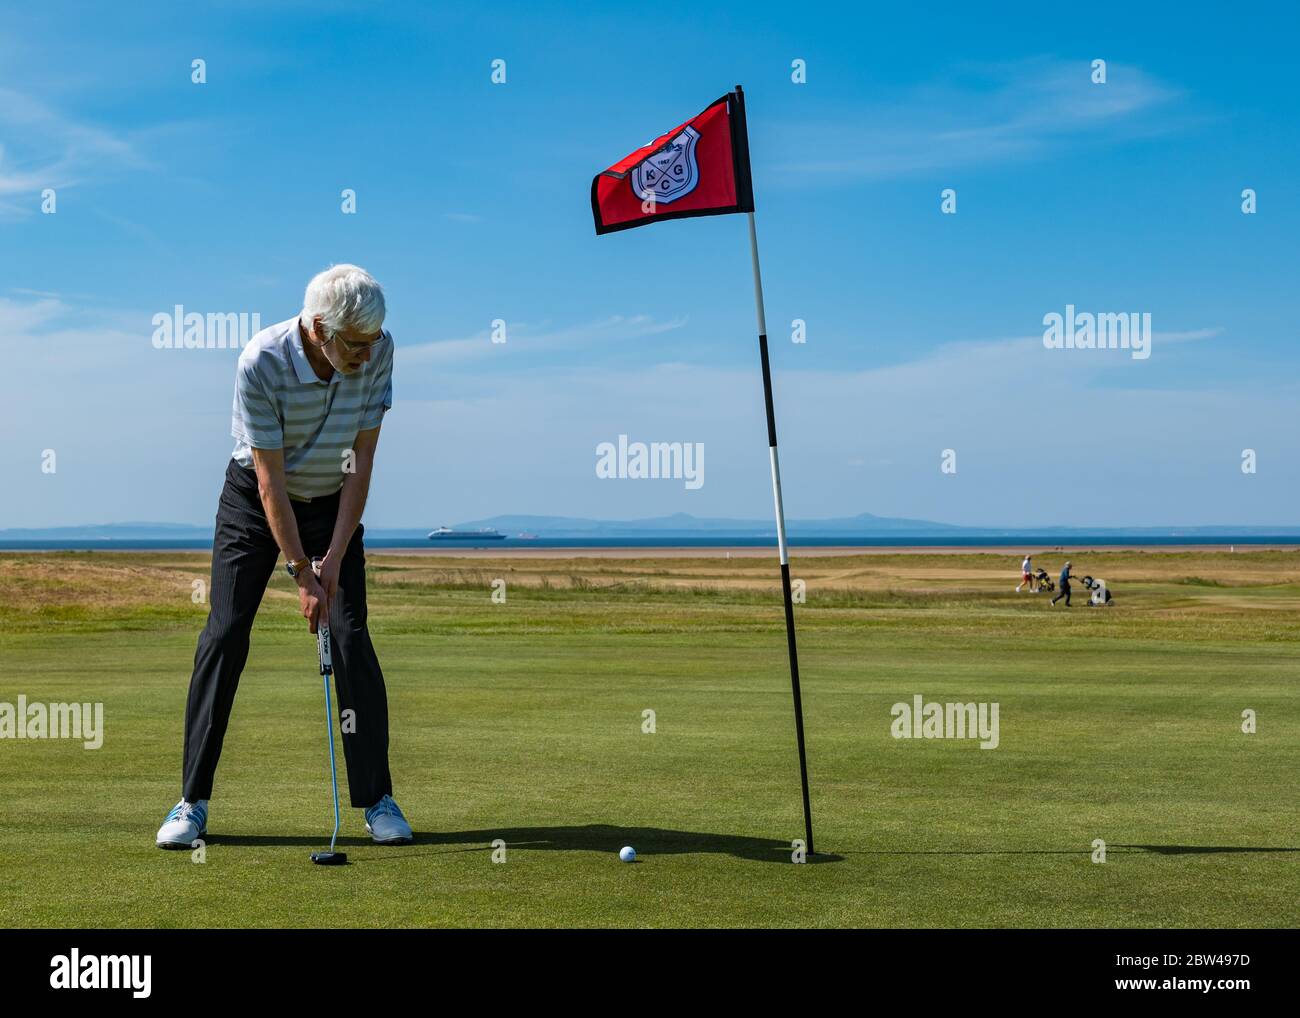 Man playing golf on putting green, Golf Club reopening, Kilspindie golf course, Aberlady, Scotland, UK Stock Photo